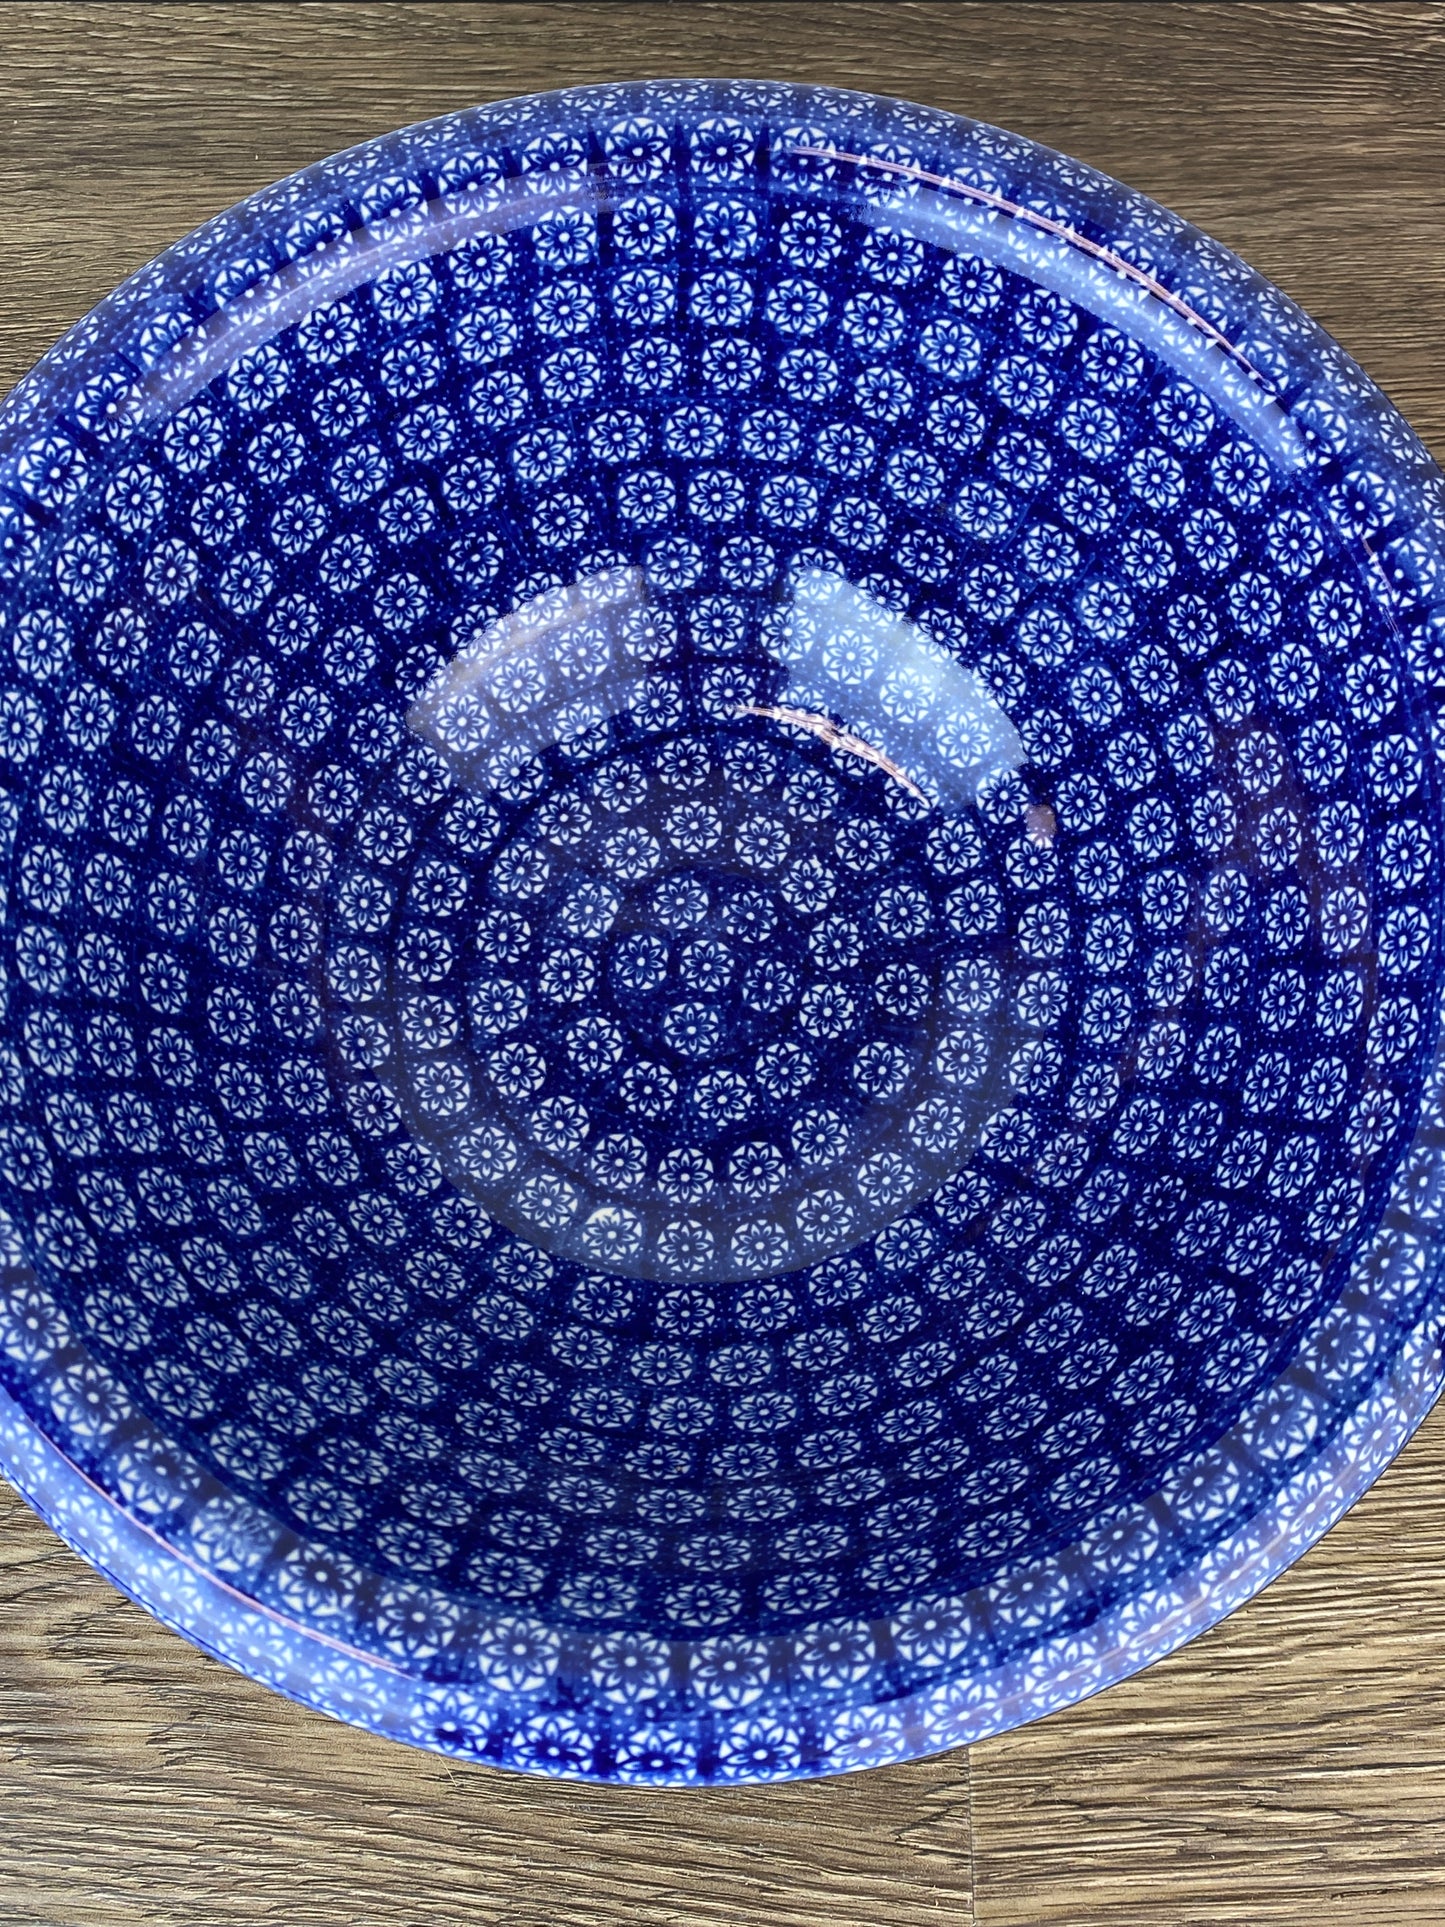 Rolled Edge Bowl - Shape 863 - Pattern 1548